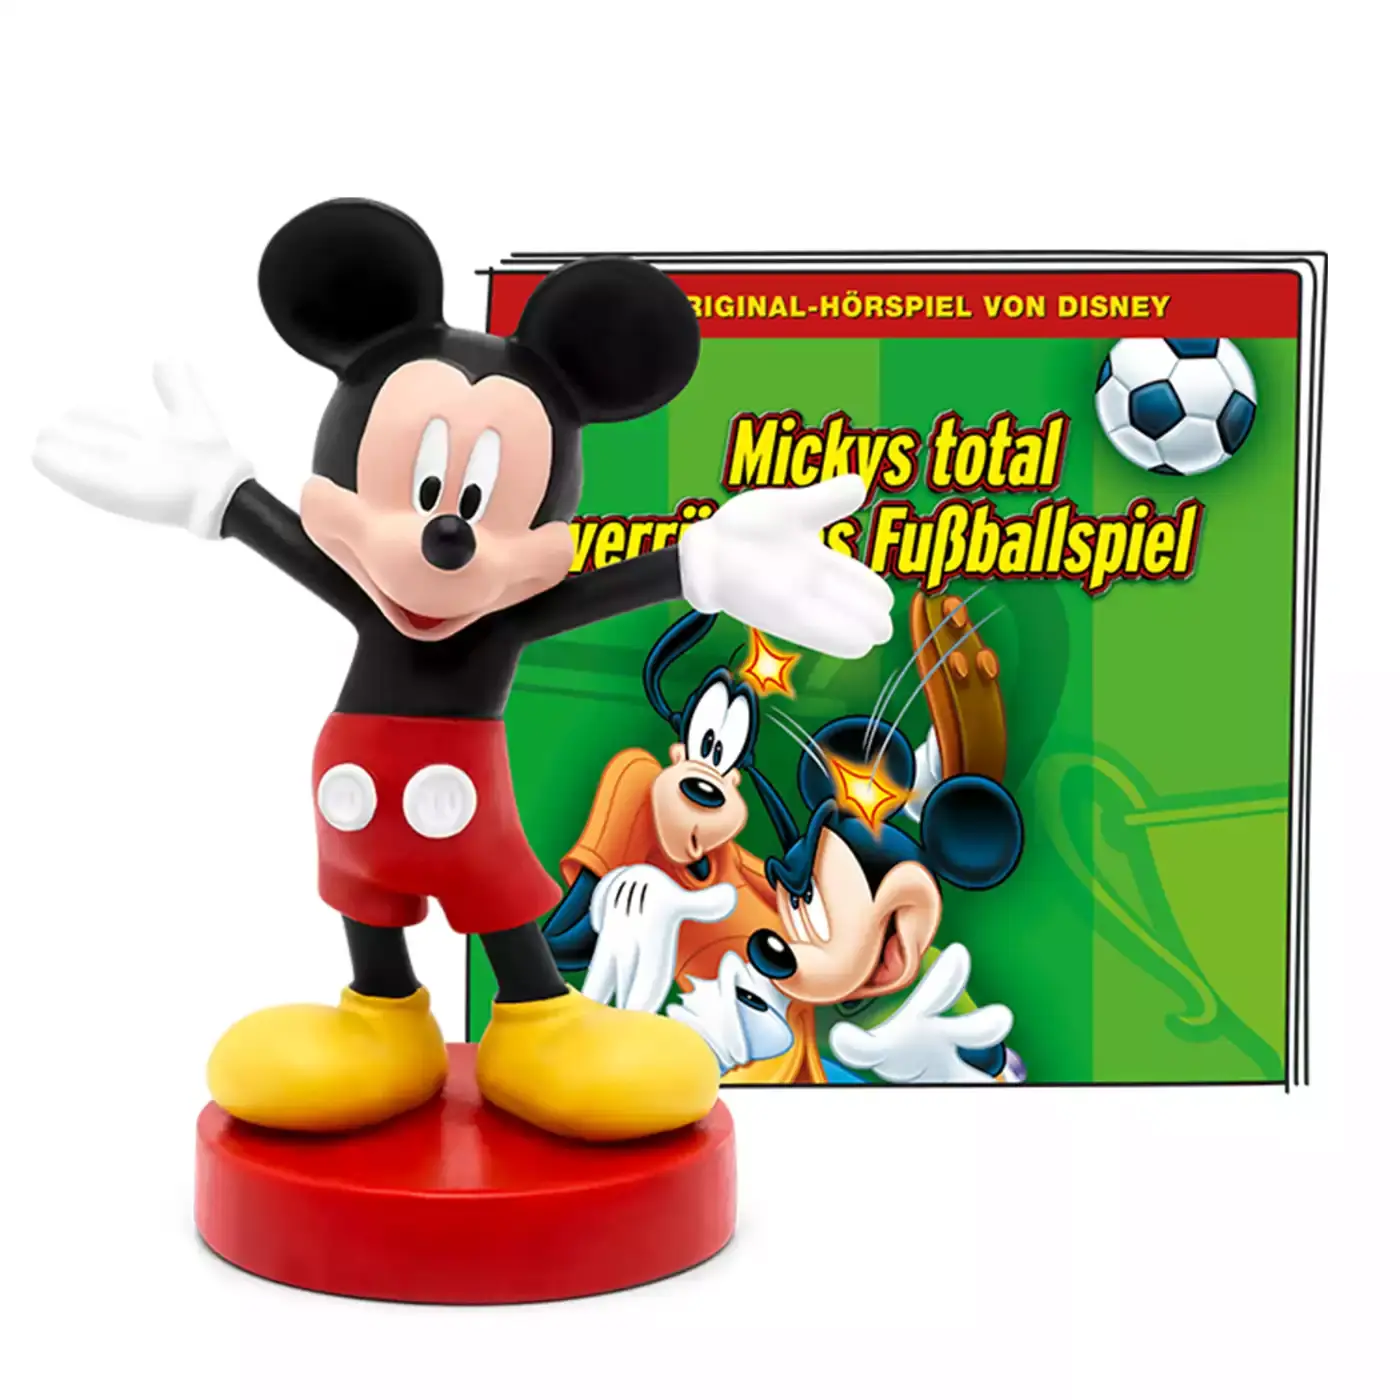 Disney - Mickys total verrücktes Fußballspiel tonies 2000581064307 3